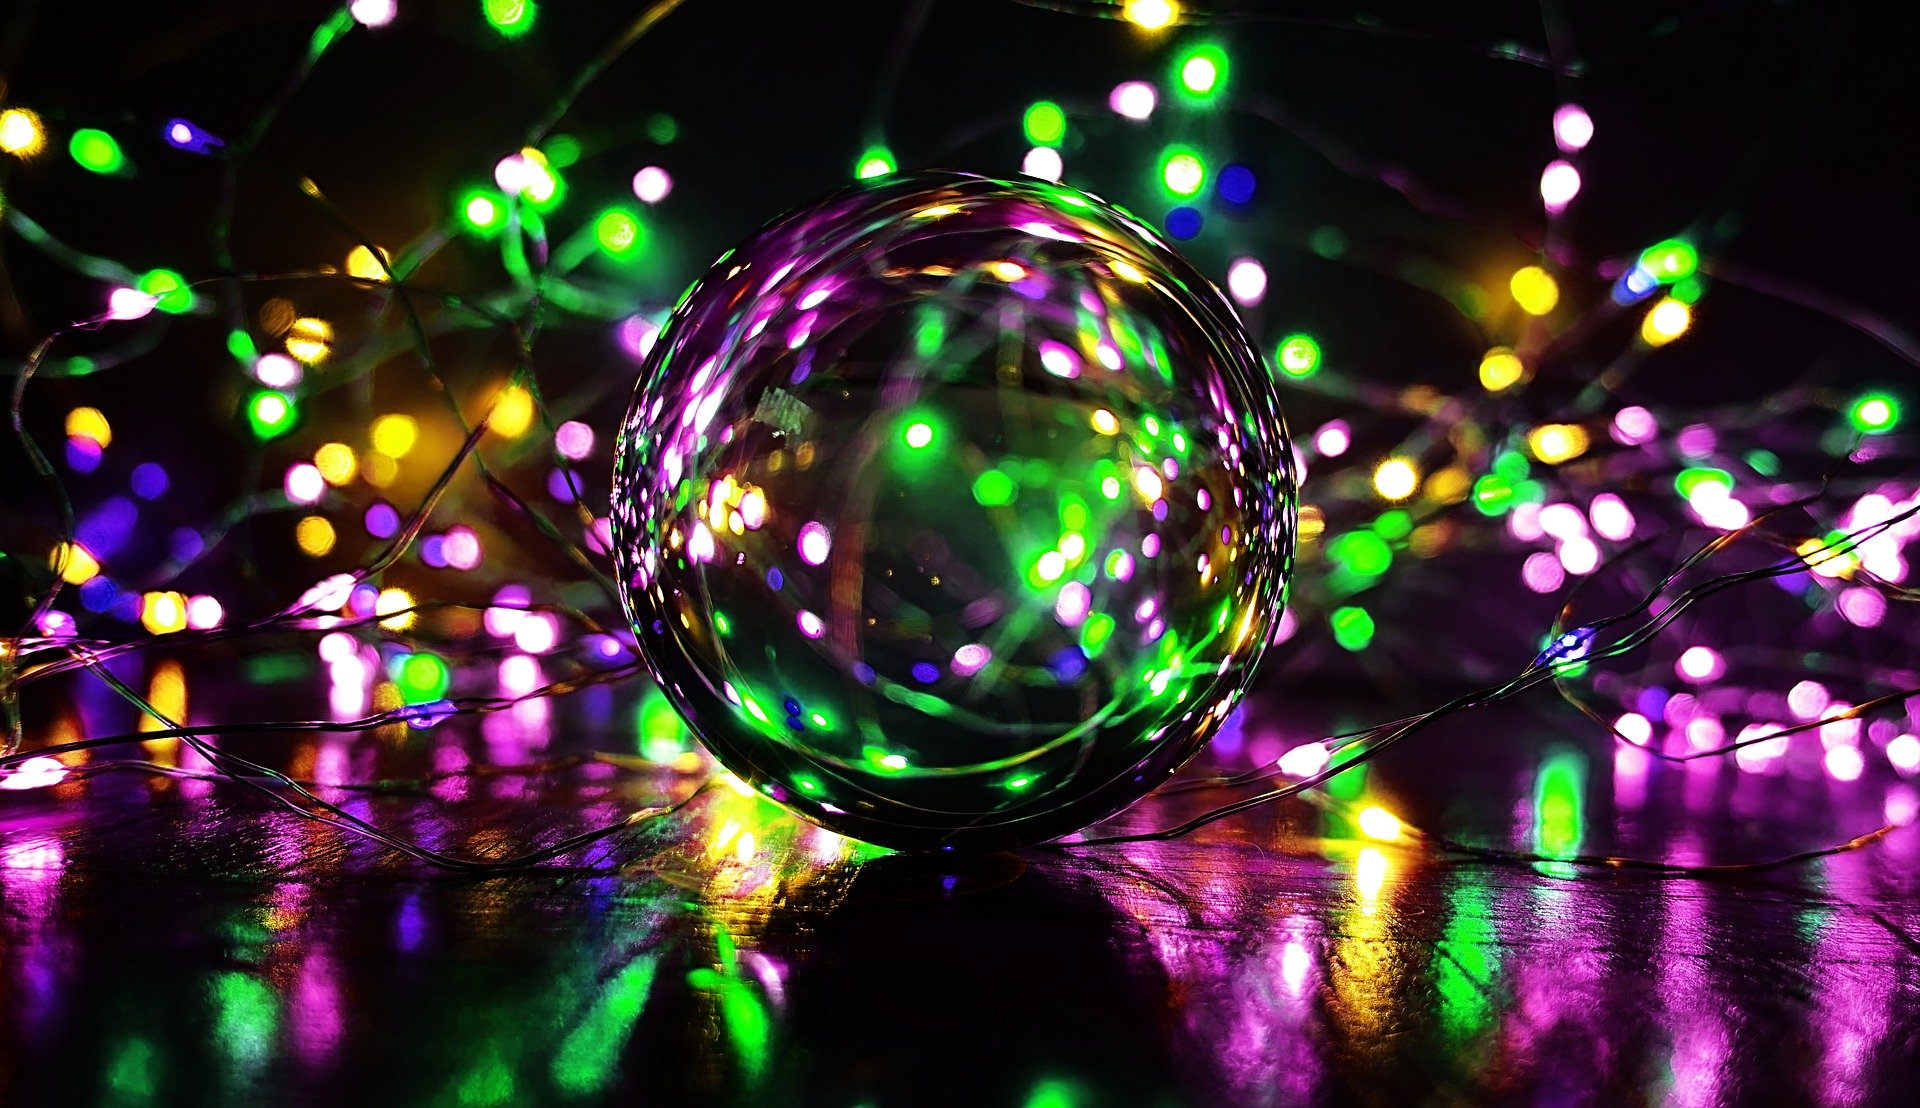 Magical image of crystal ball